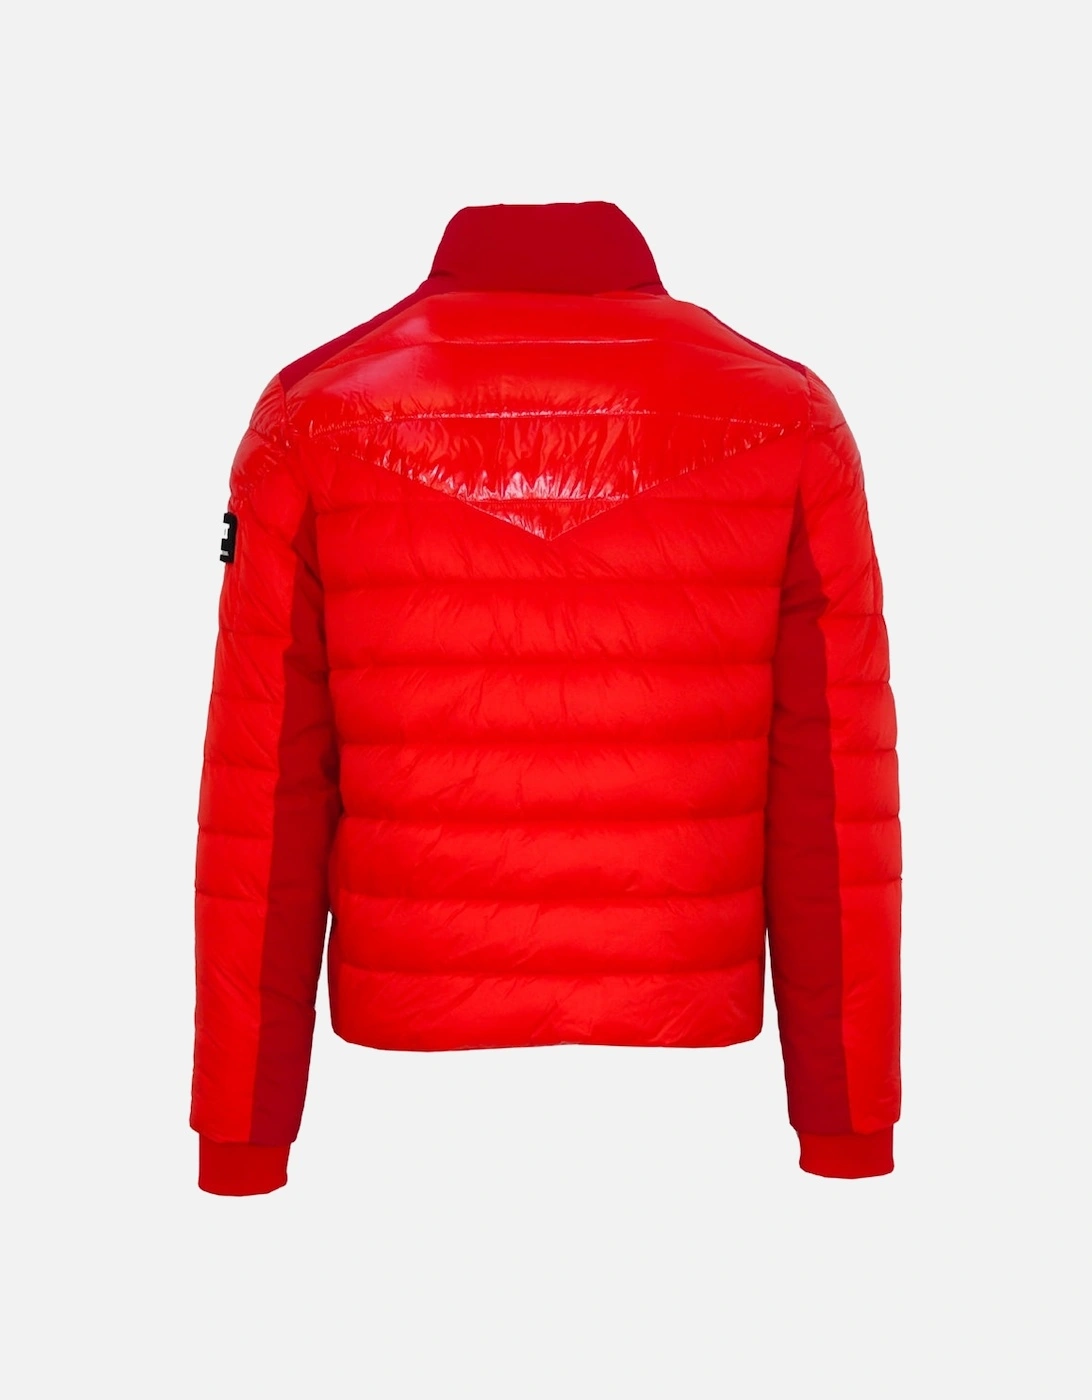 Plein Sport Plain Quilted Red Jacket